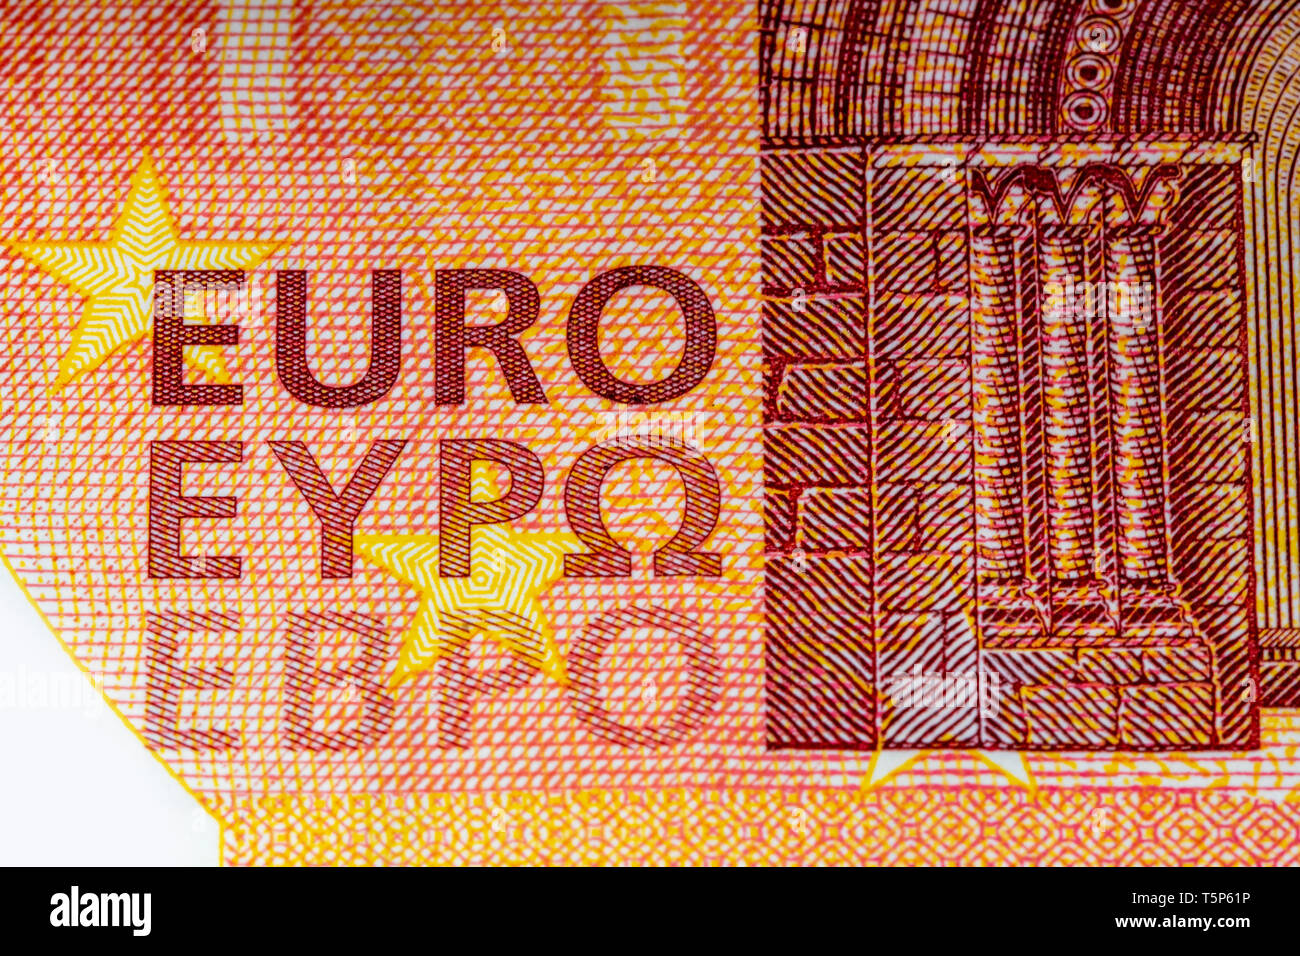 Dieci euro nota banca close up dettaglio, moneta europea Foto Stock